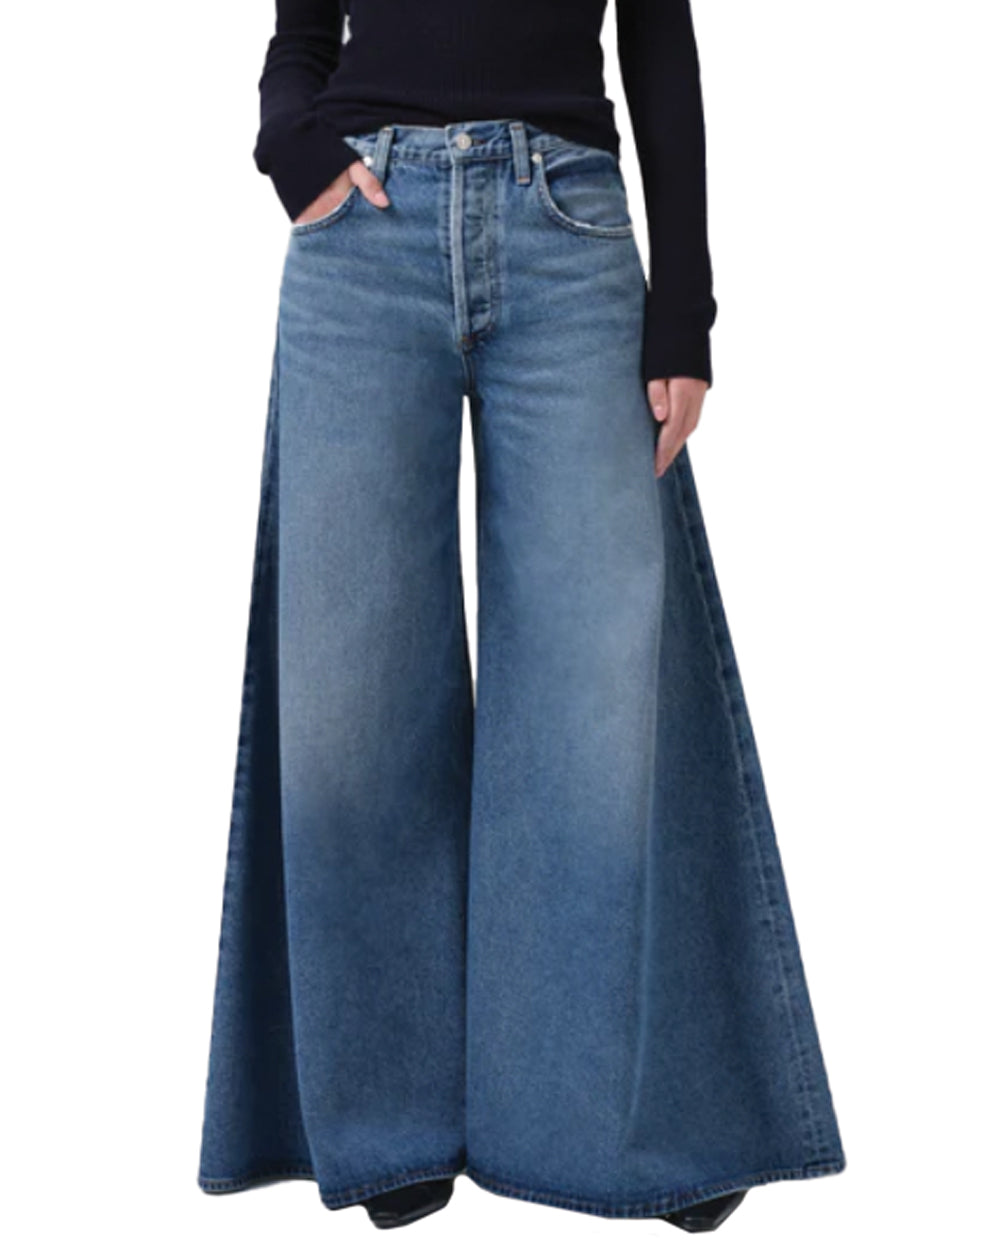 Amari Ultra Jean in Dweller